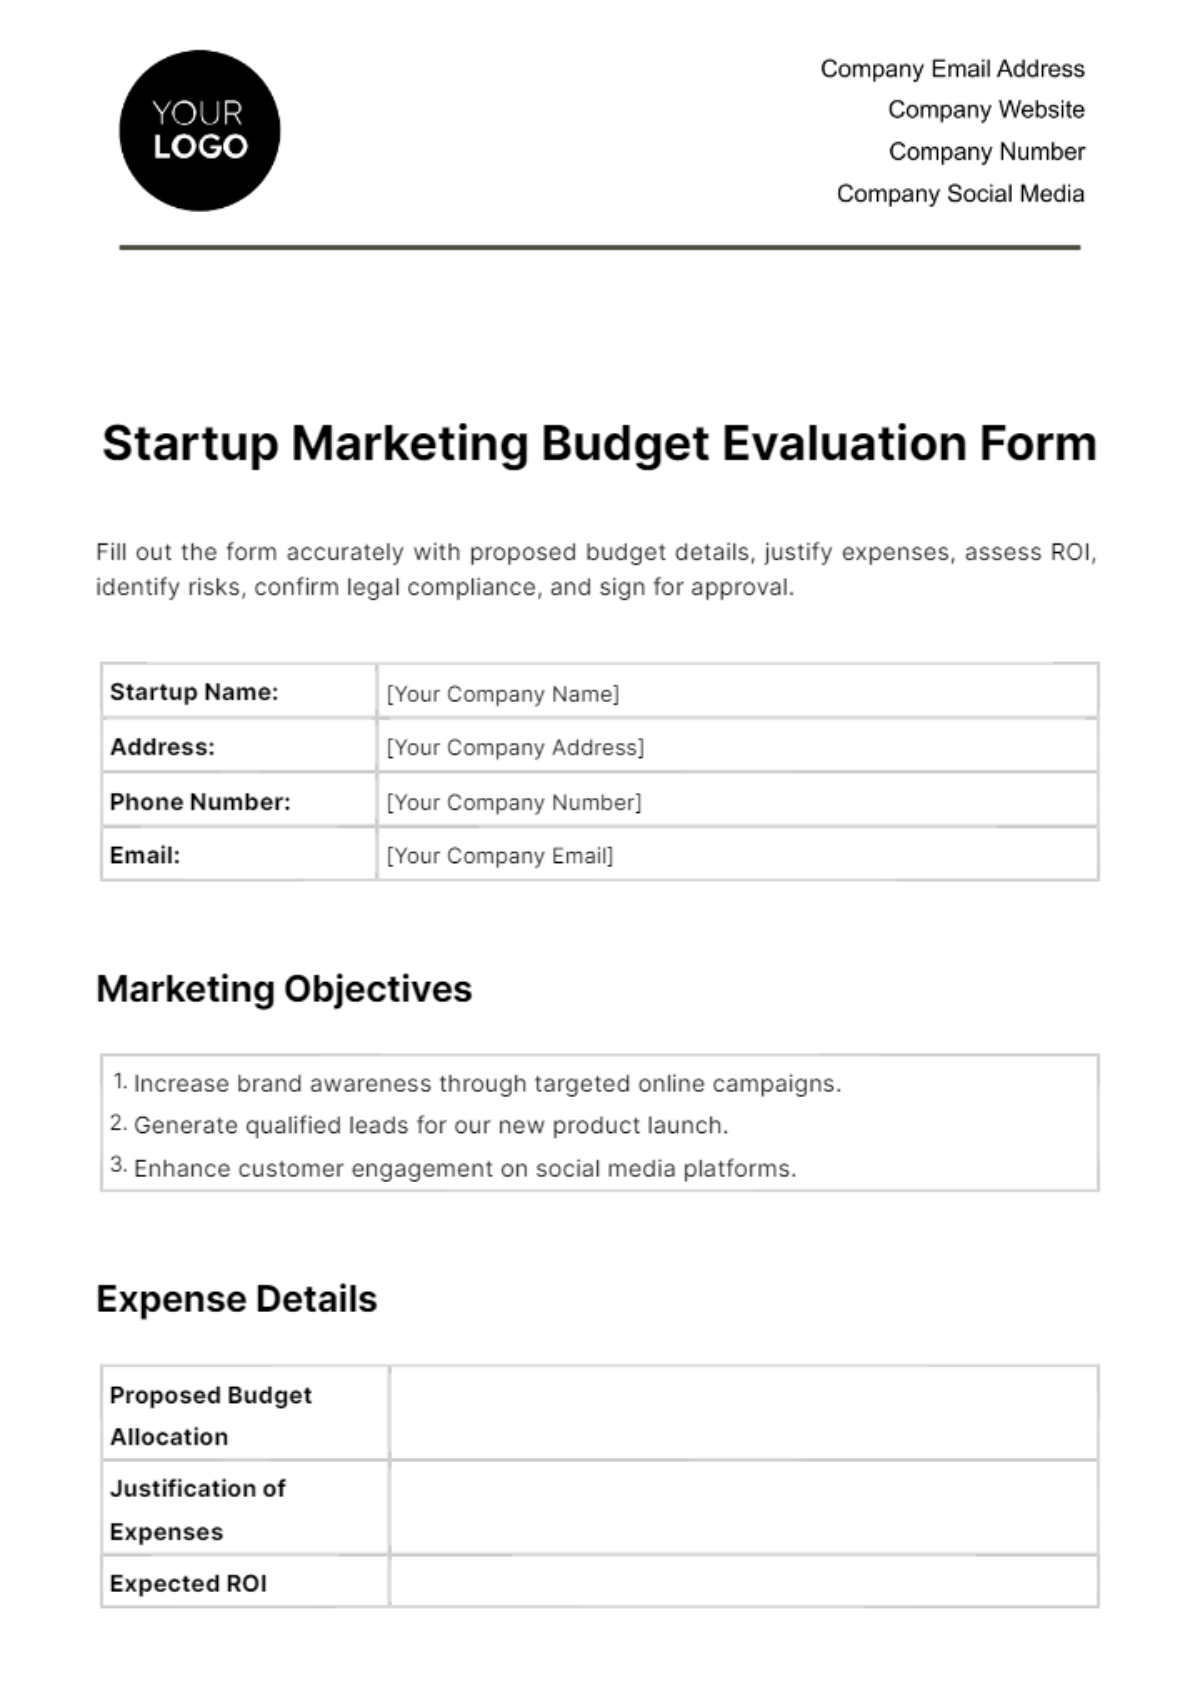 Startup Marketing Budget Evaluation Form Template